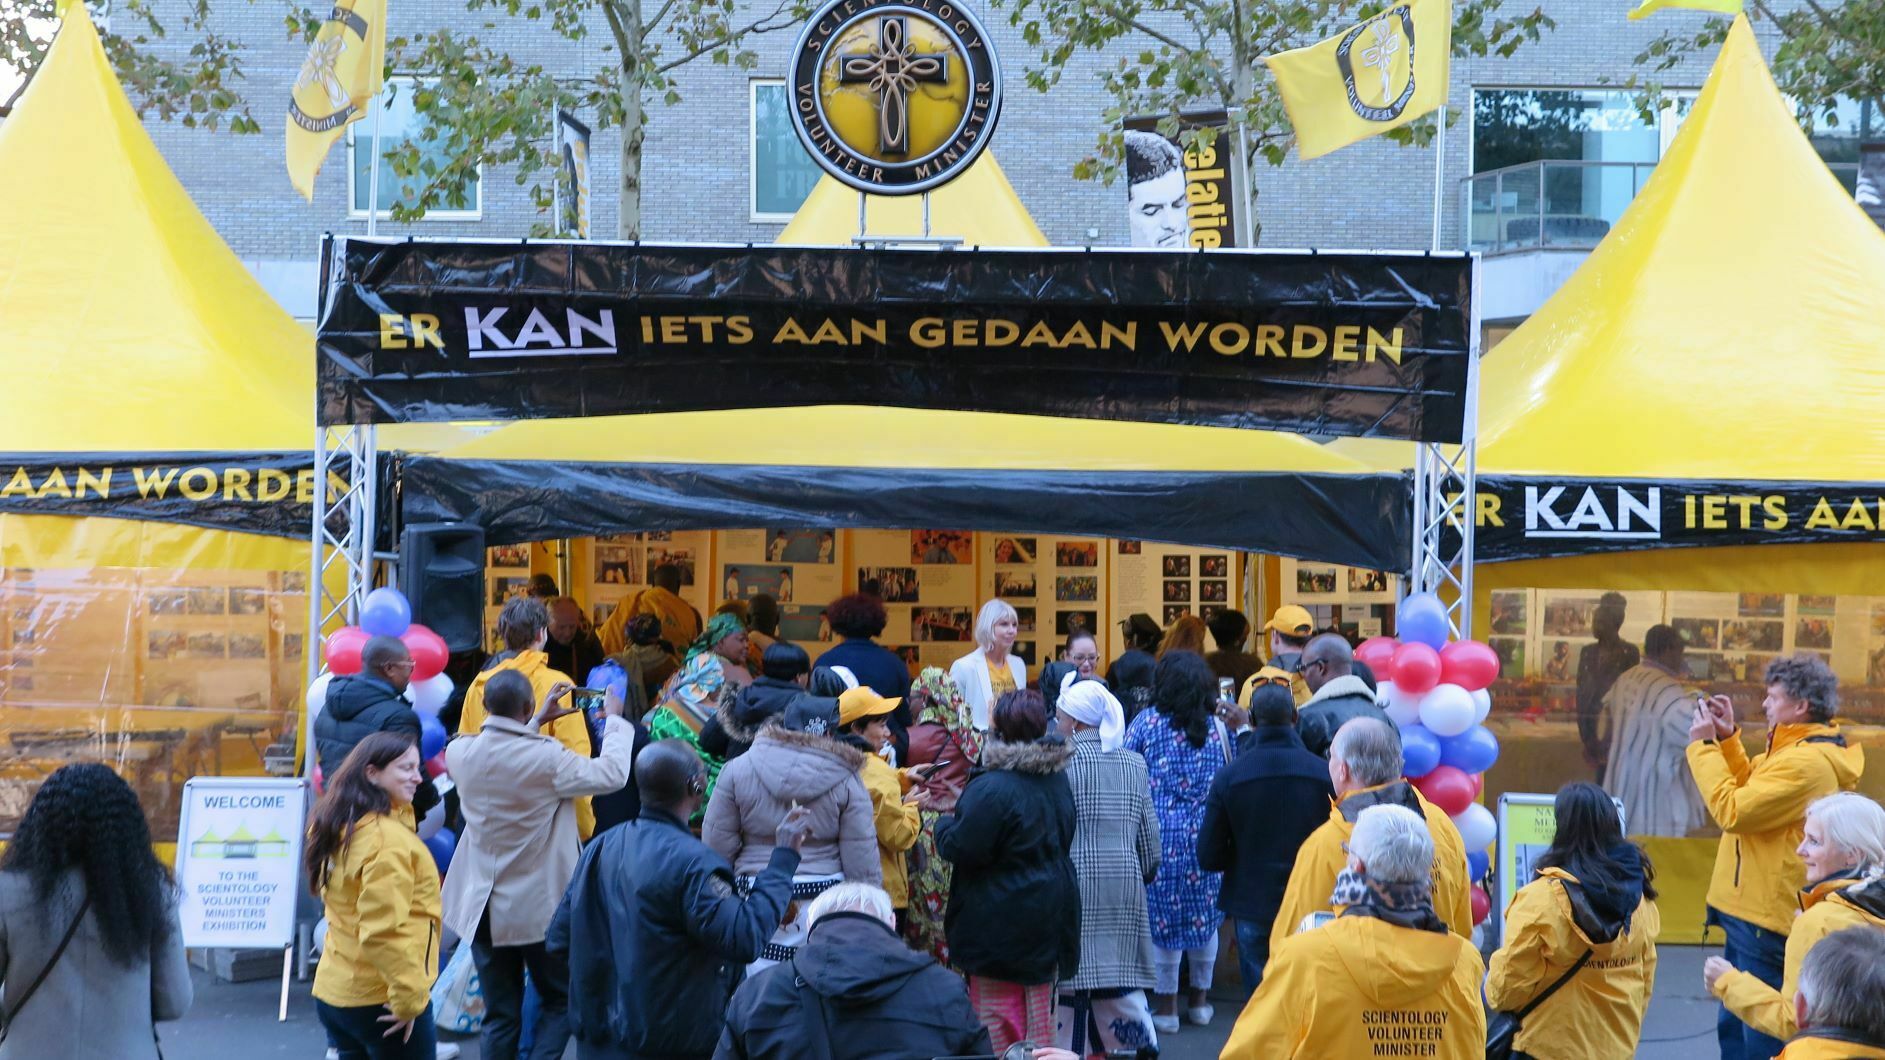 Volunteer Ministers Tent in Amsterdam